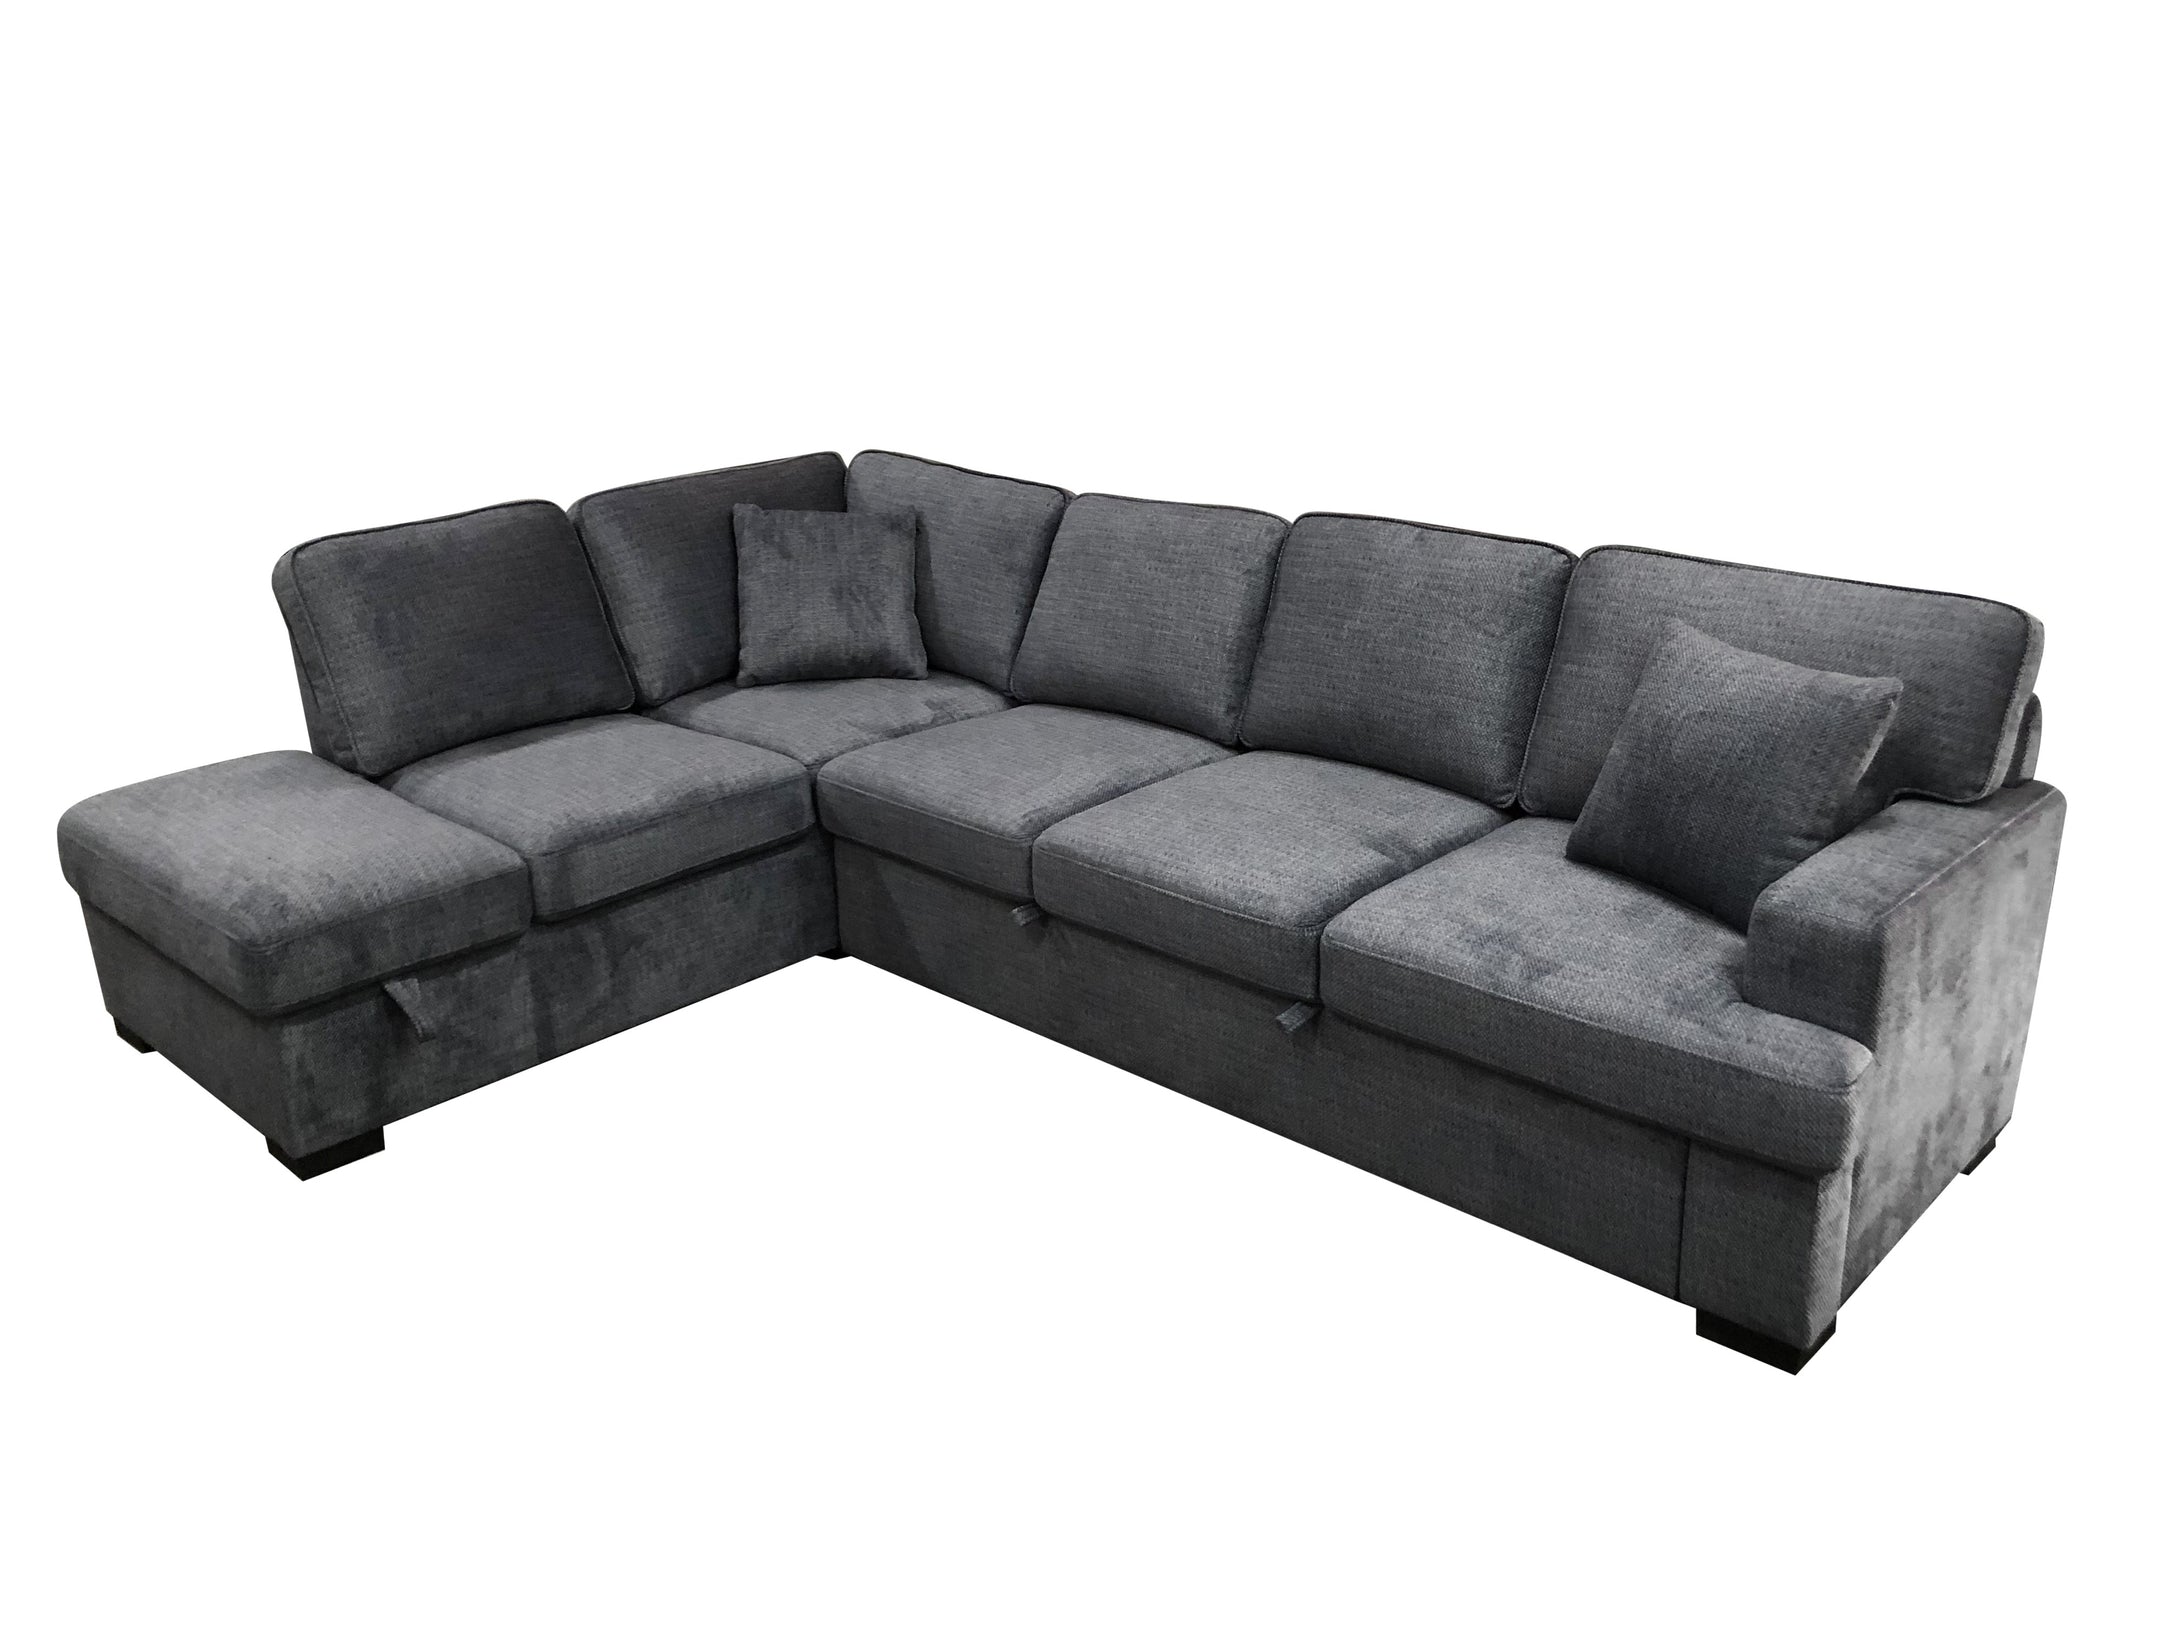 Maldon Sleeper Sofa - Richicollection Furniture Warehouse